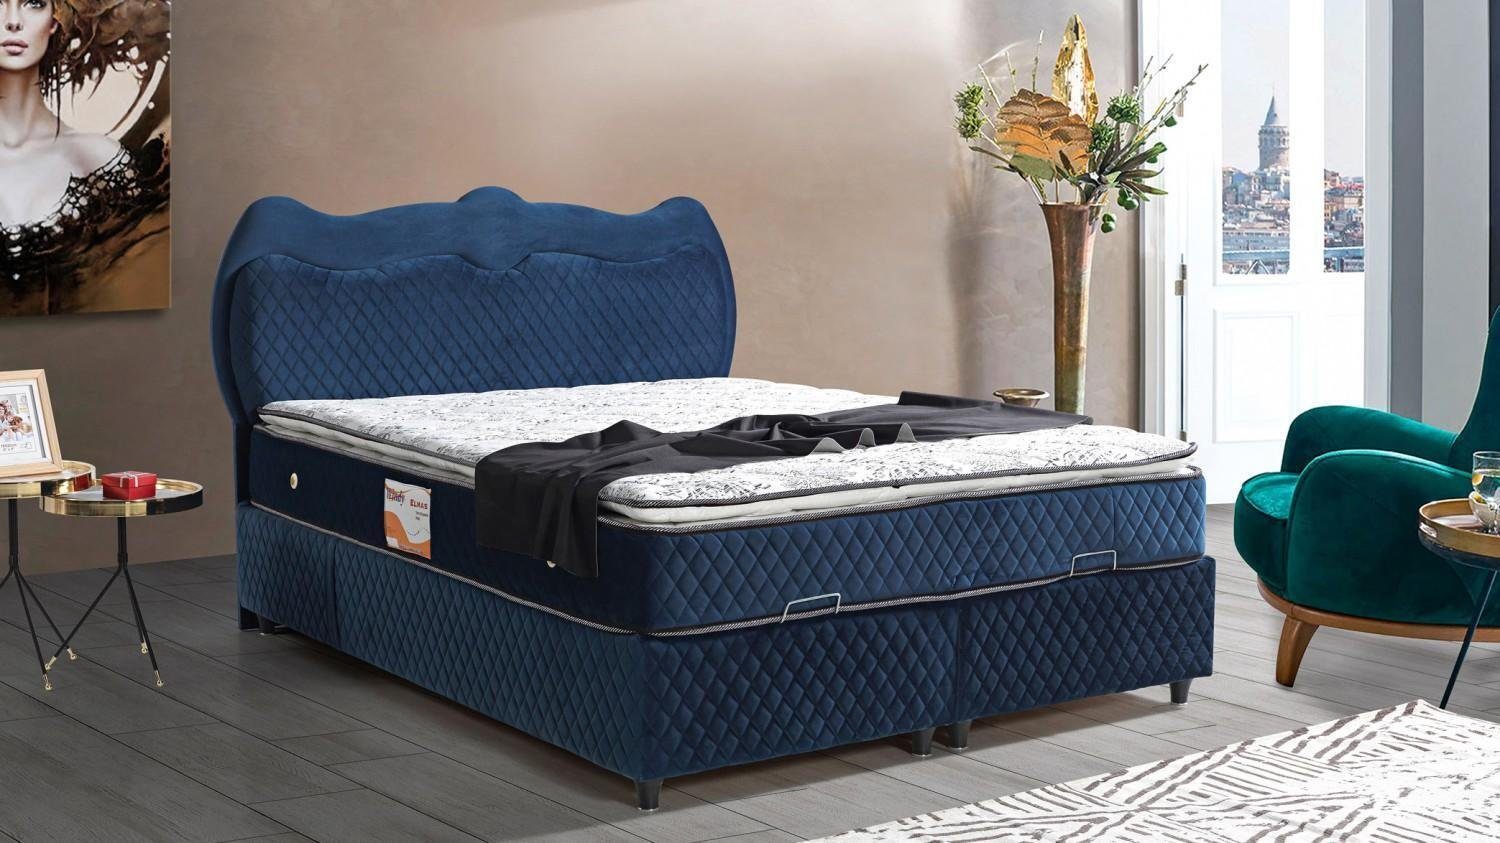 JVmoebel Bett Bett Design Betten Luxus Blau Polster Schlafzimmer Möbel Luxus Modern (Bett), Made In Europe